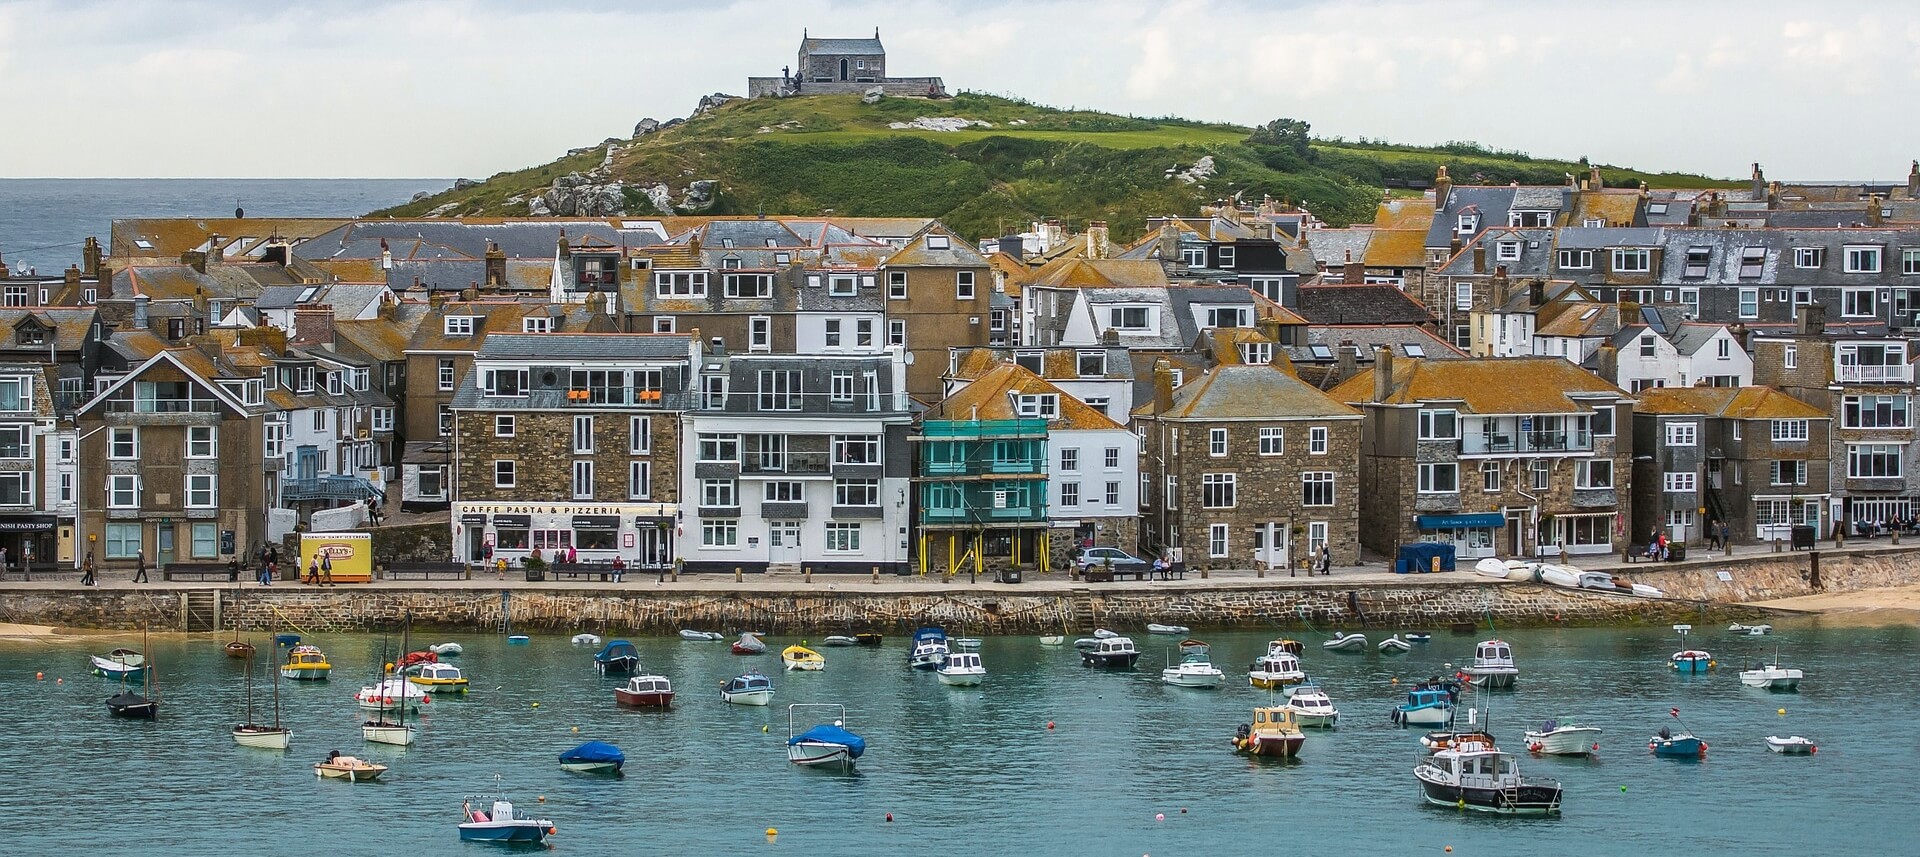 A town on the Cornish coast